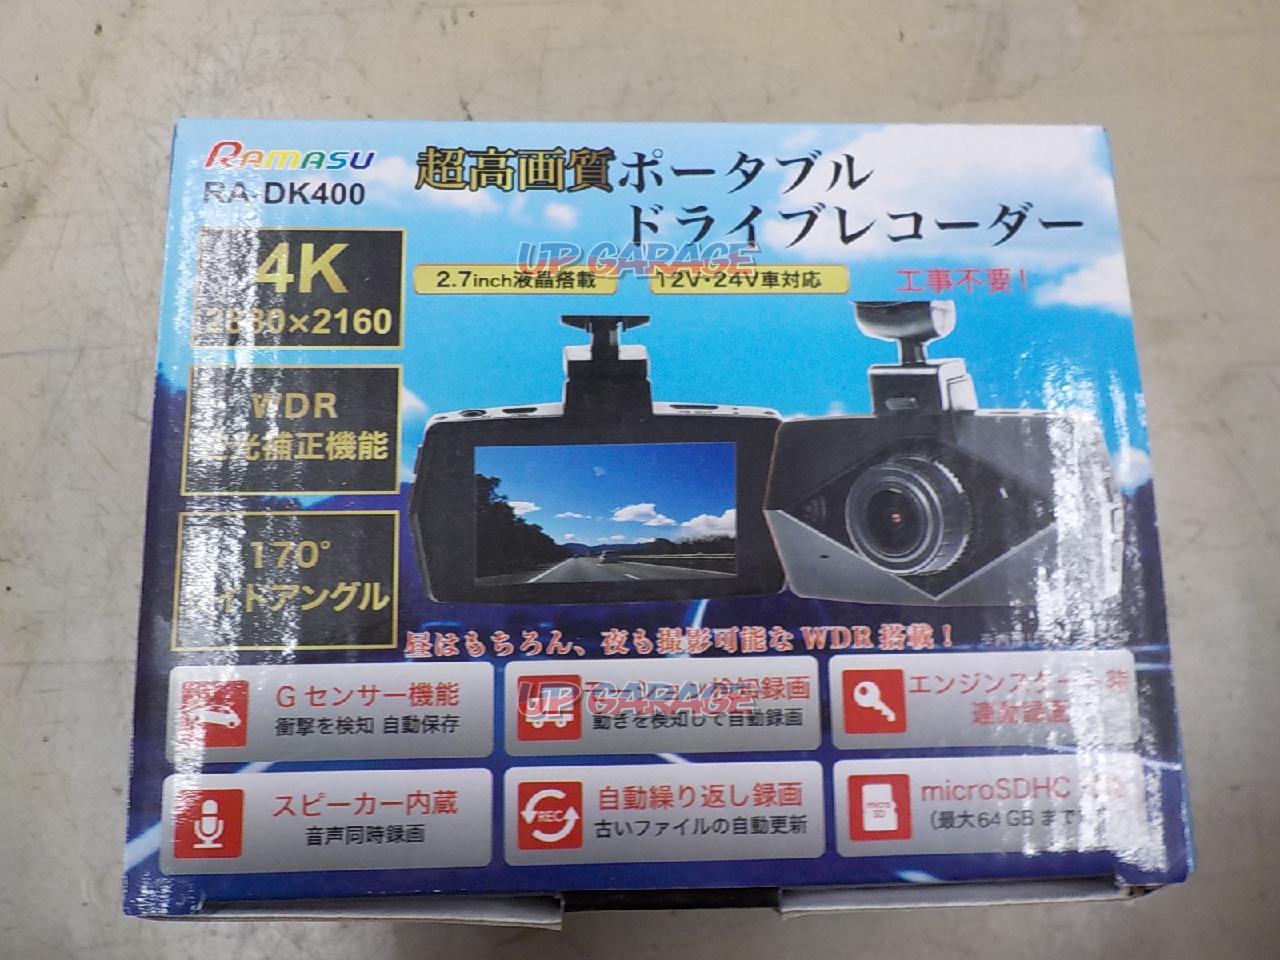 RAMASU RA-DK 400 Drive Recorder | Drive Recorder | Croooober